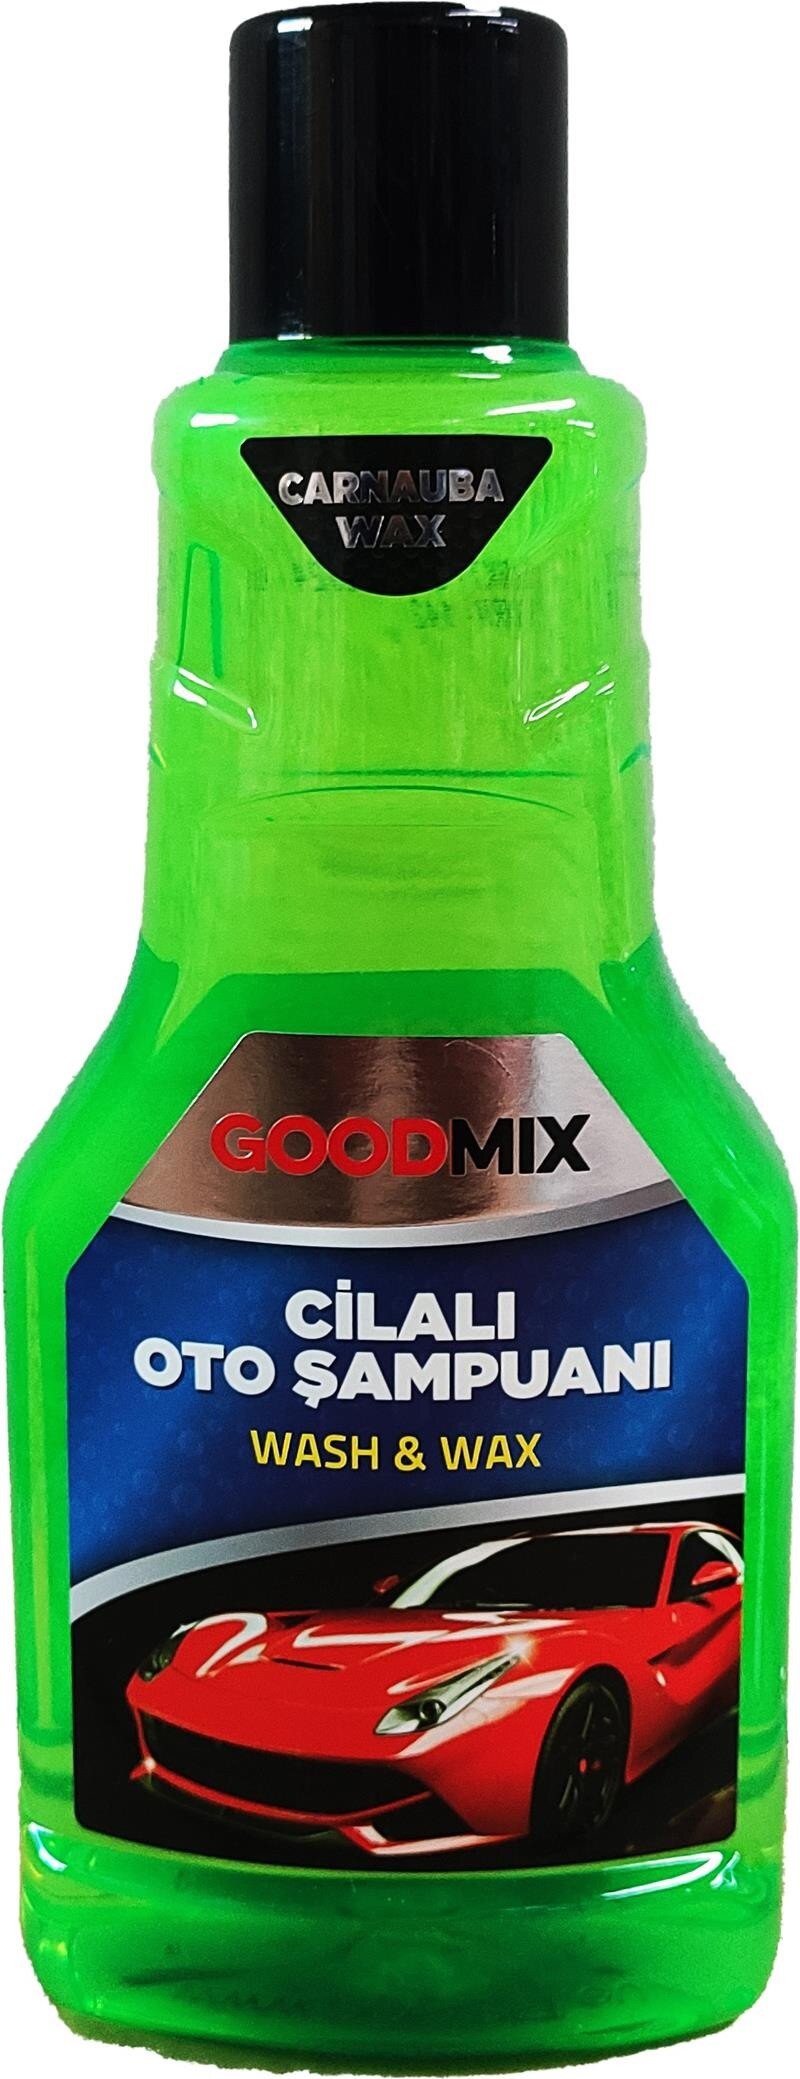 Goodmix Cilalı Oto Şampuanı 1000 Gr.